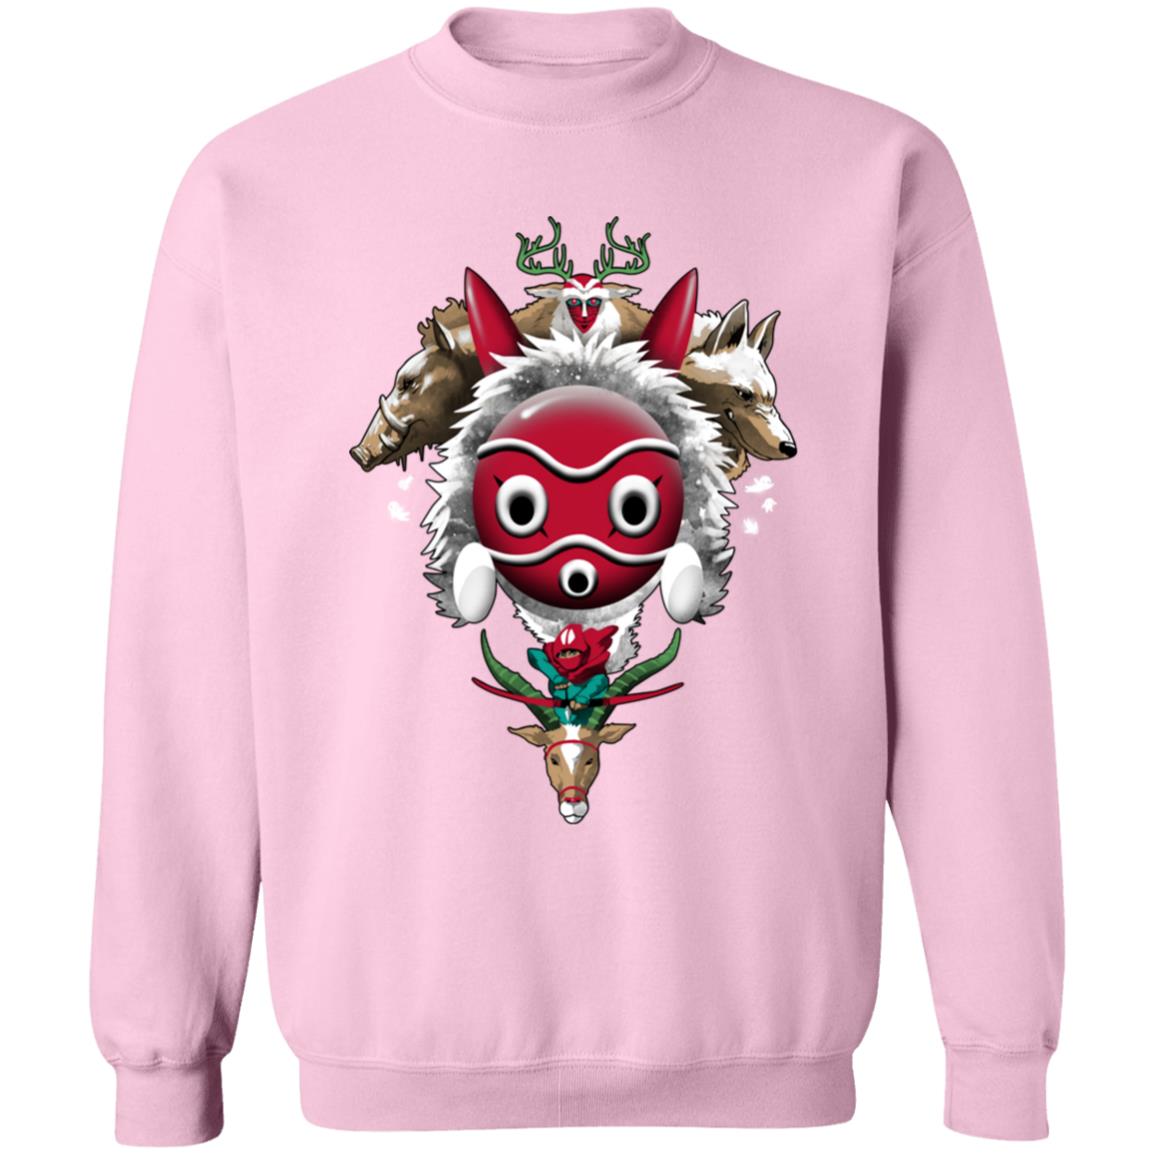 Princess Mononoke – The Forest Protectors Sweatshirt